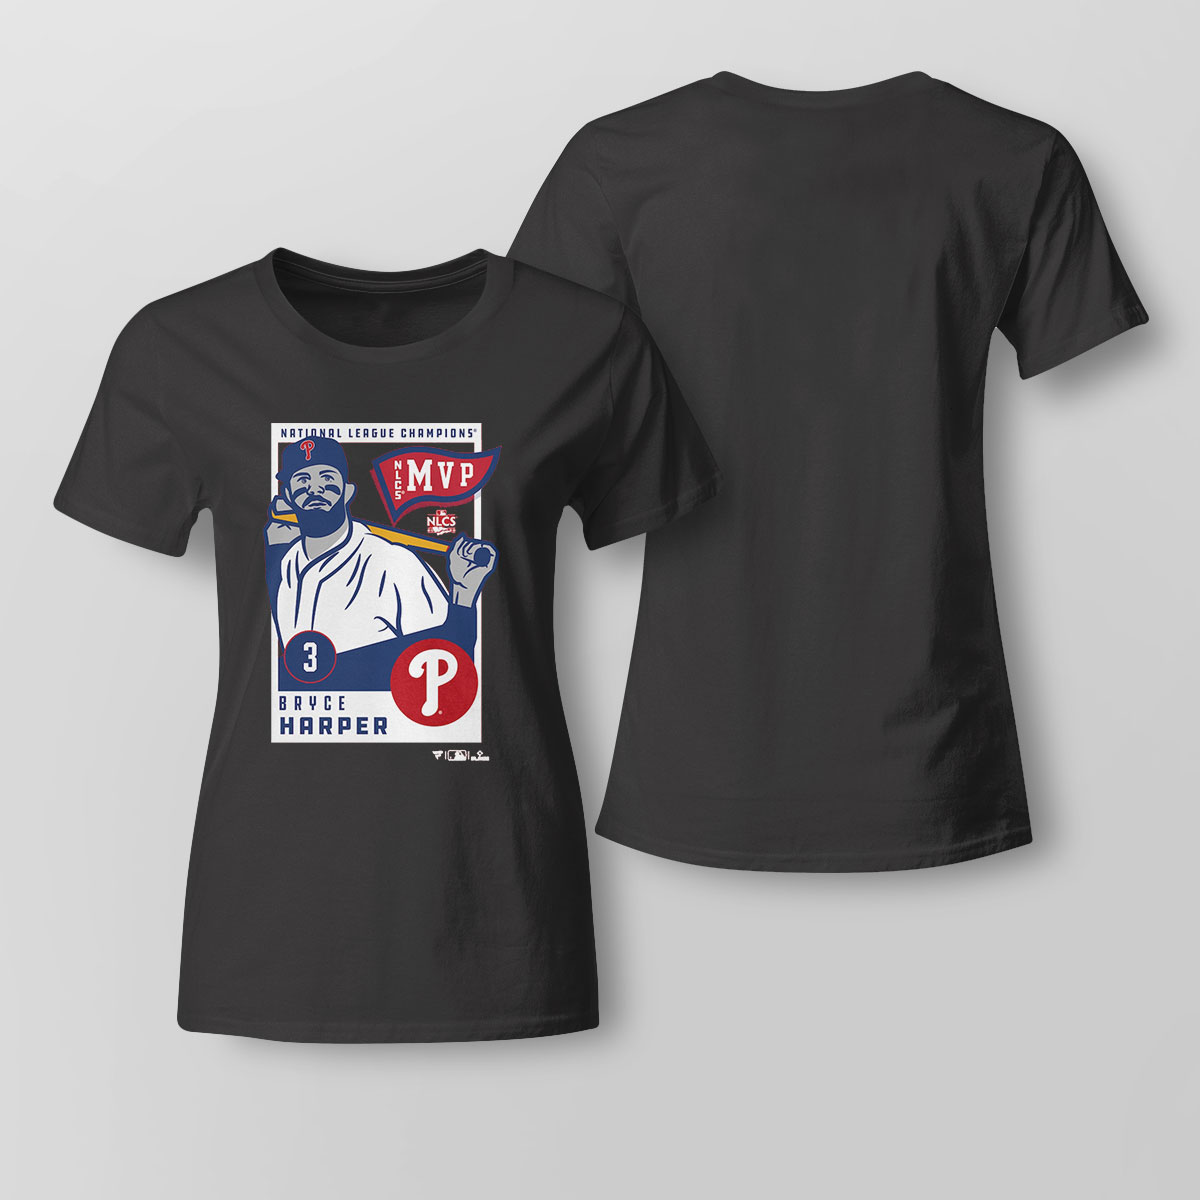 Short Sleeve Phillies National League Champions T-Shirt